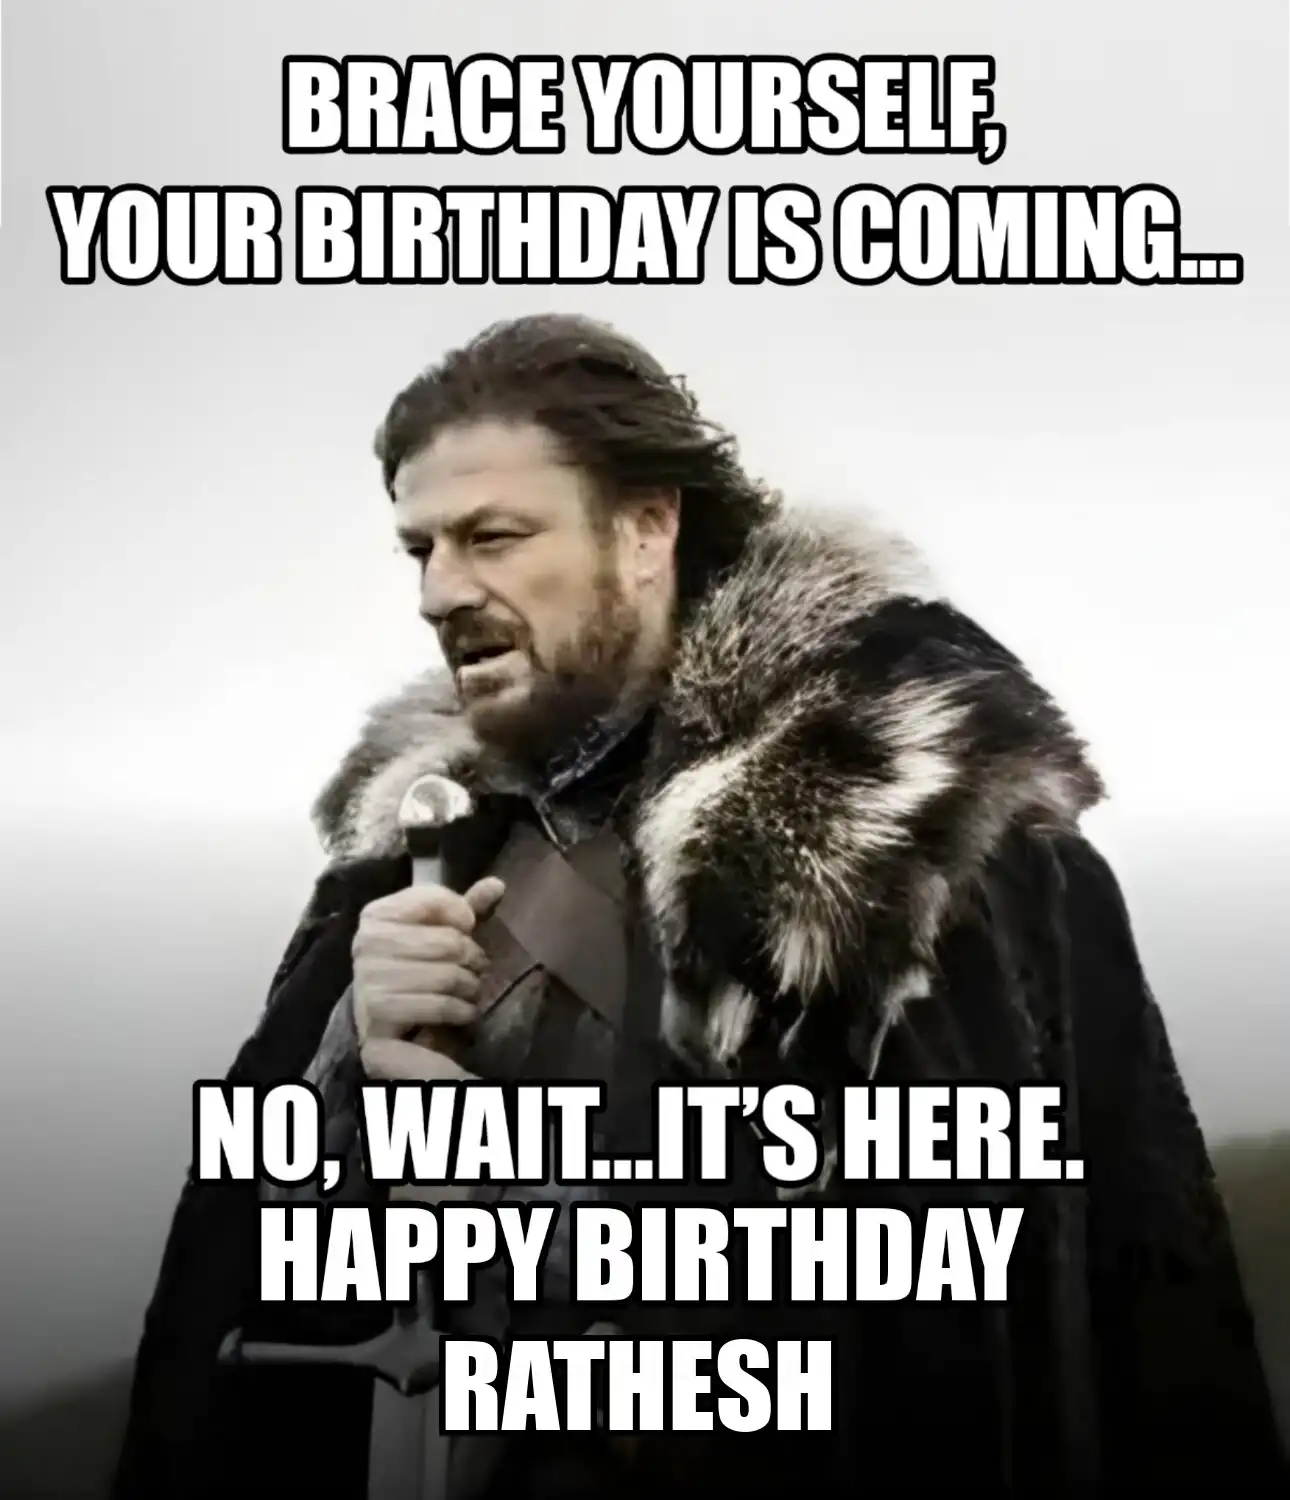 Happy Birthday Rathesh Brace Yourself Your Birthday Is Coming Meme